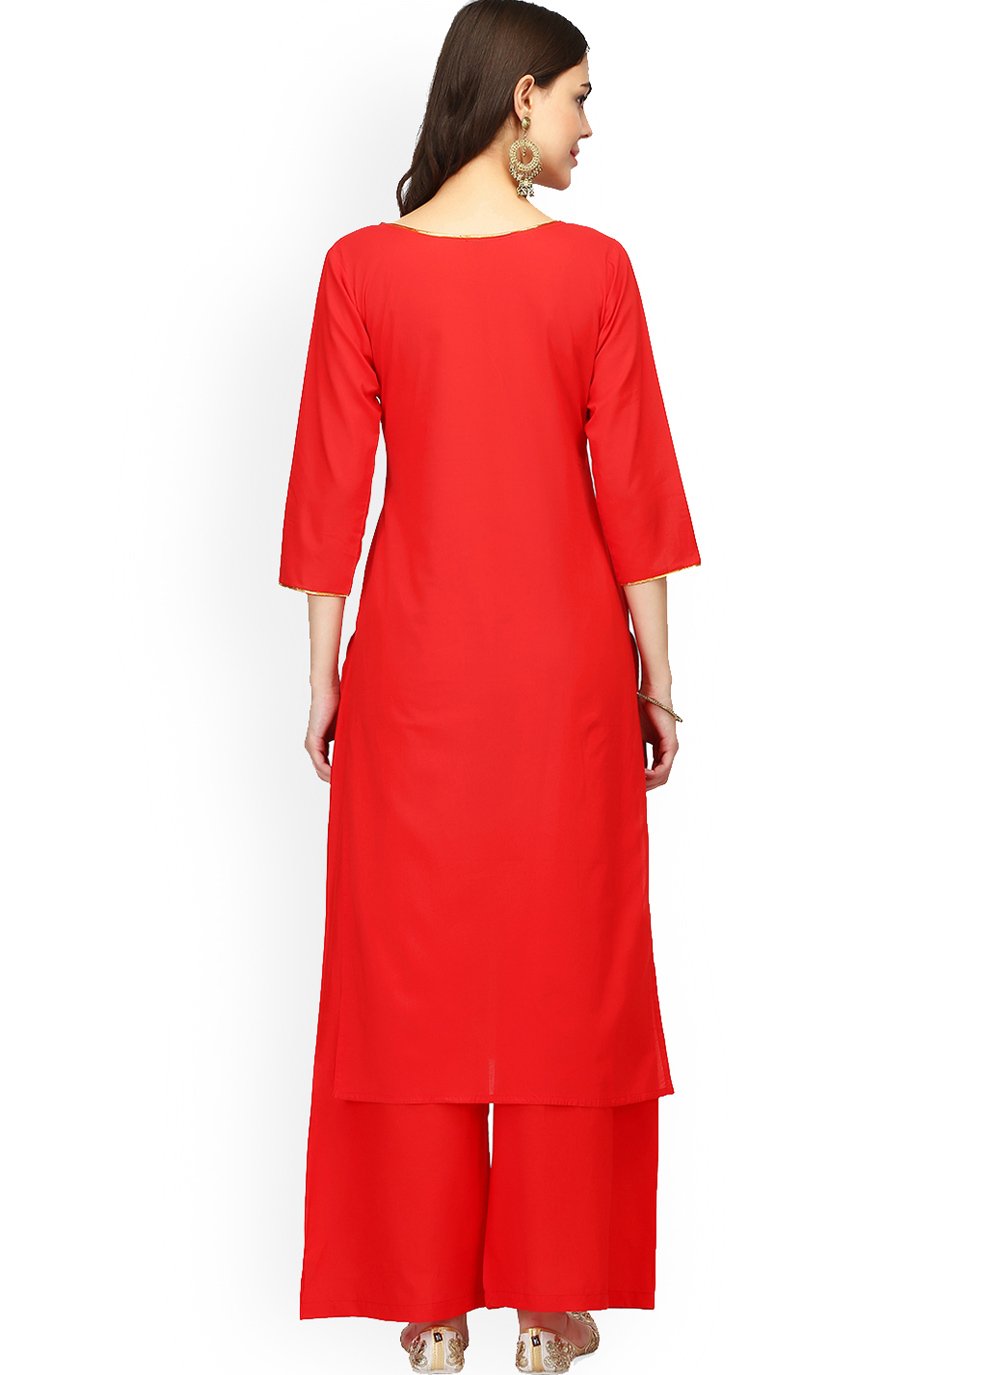 Shop Online Rayon Plain Red Designer Kurti : 167101 -